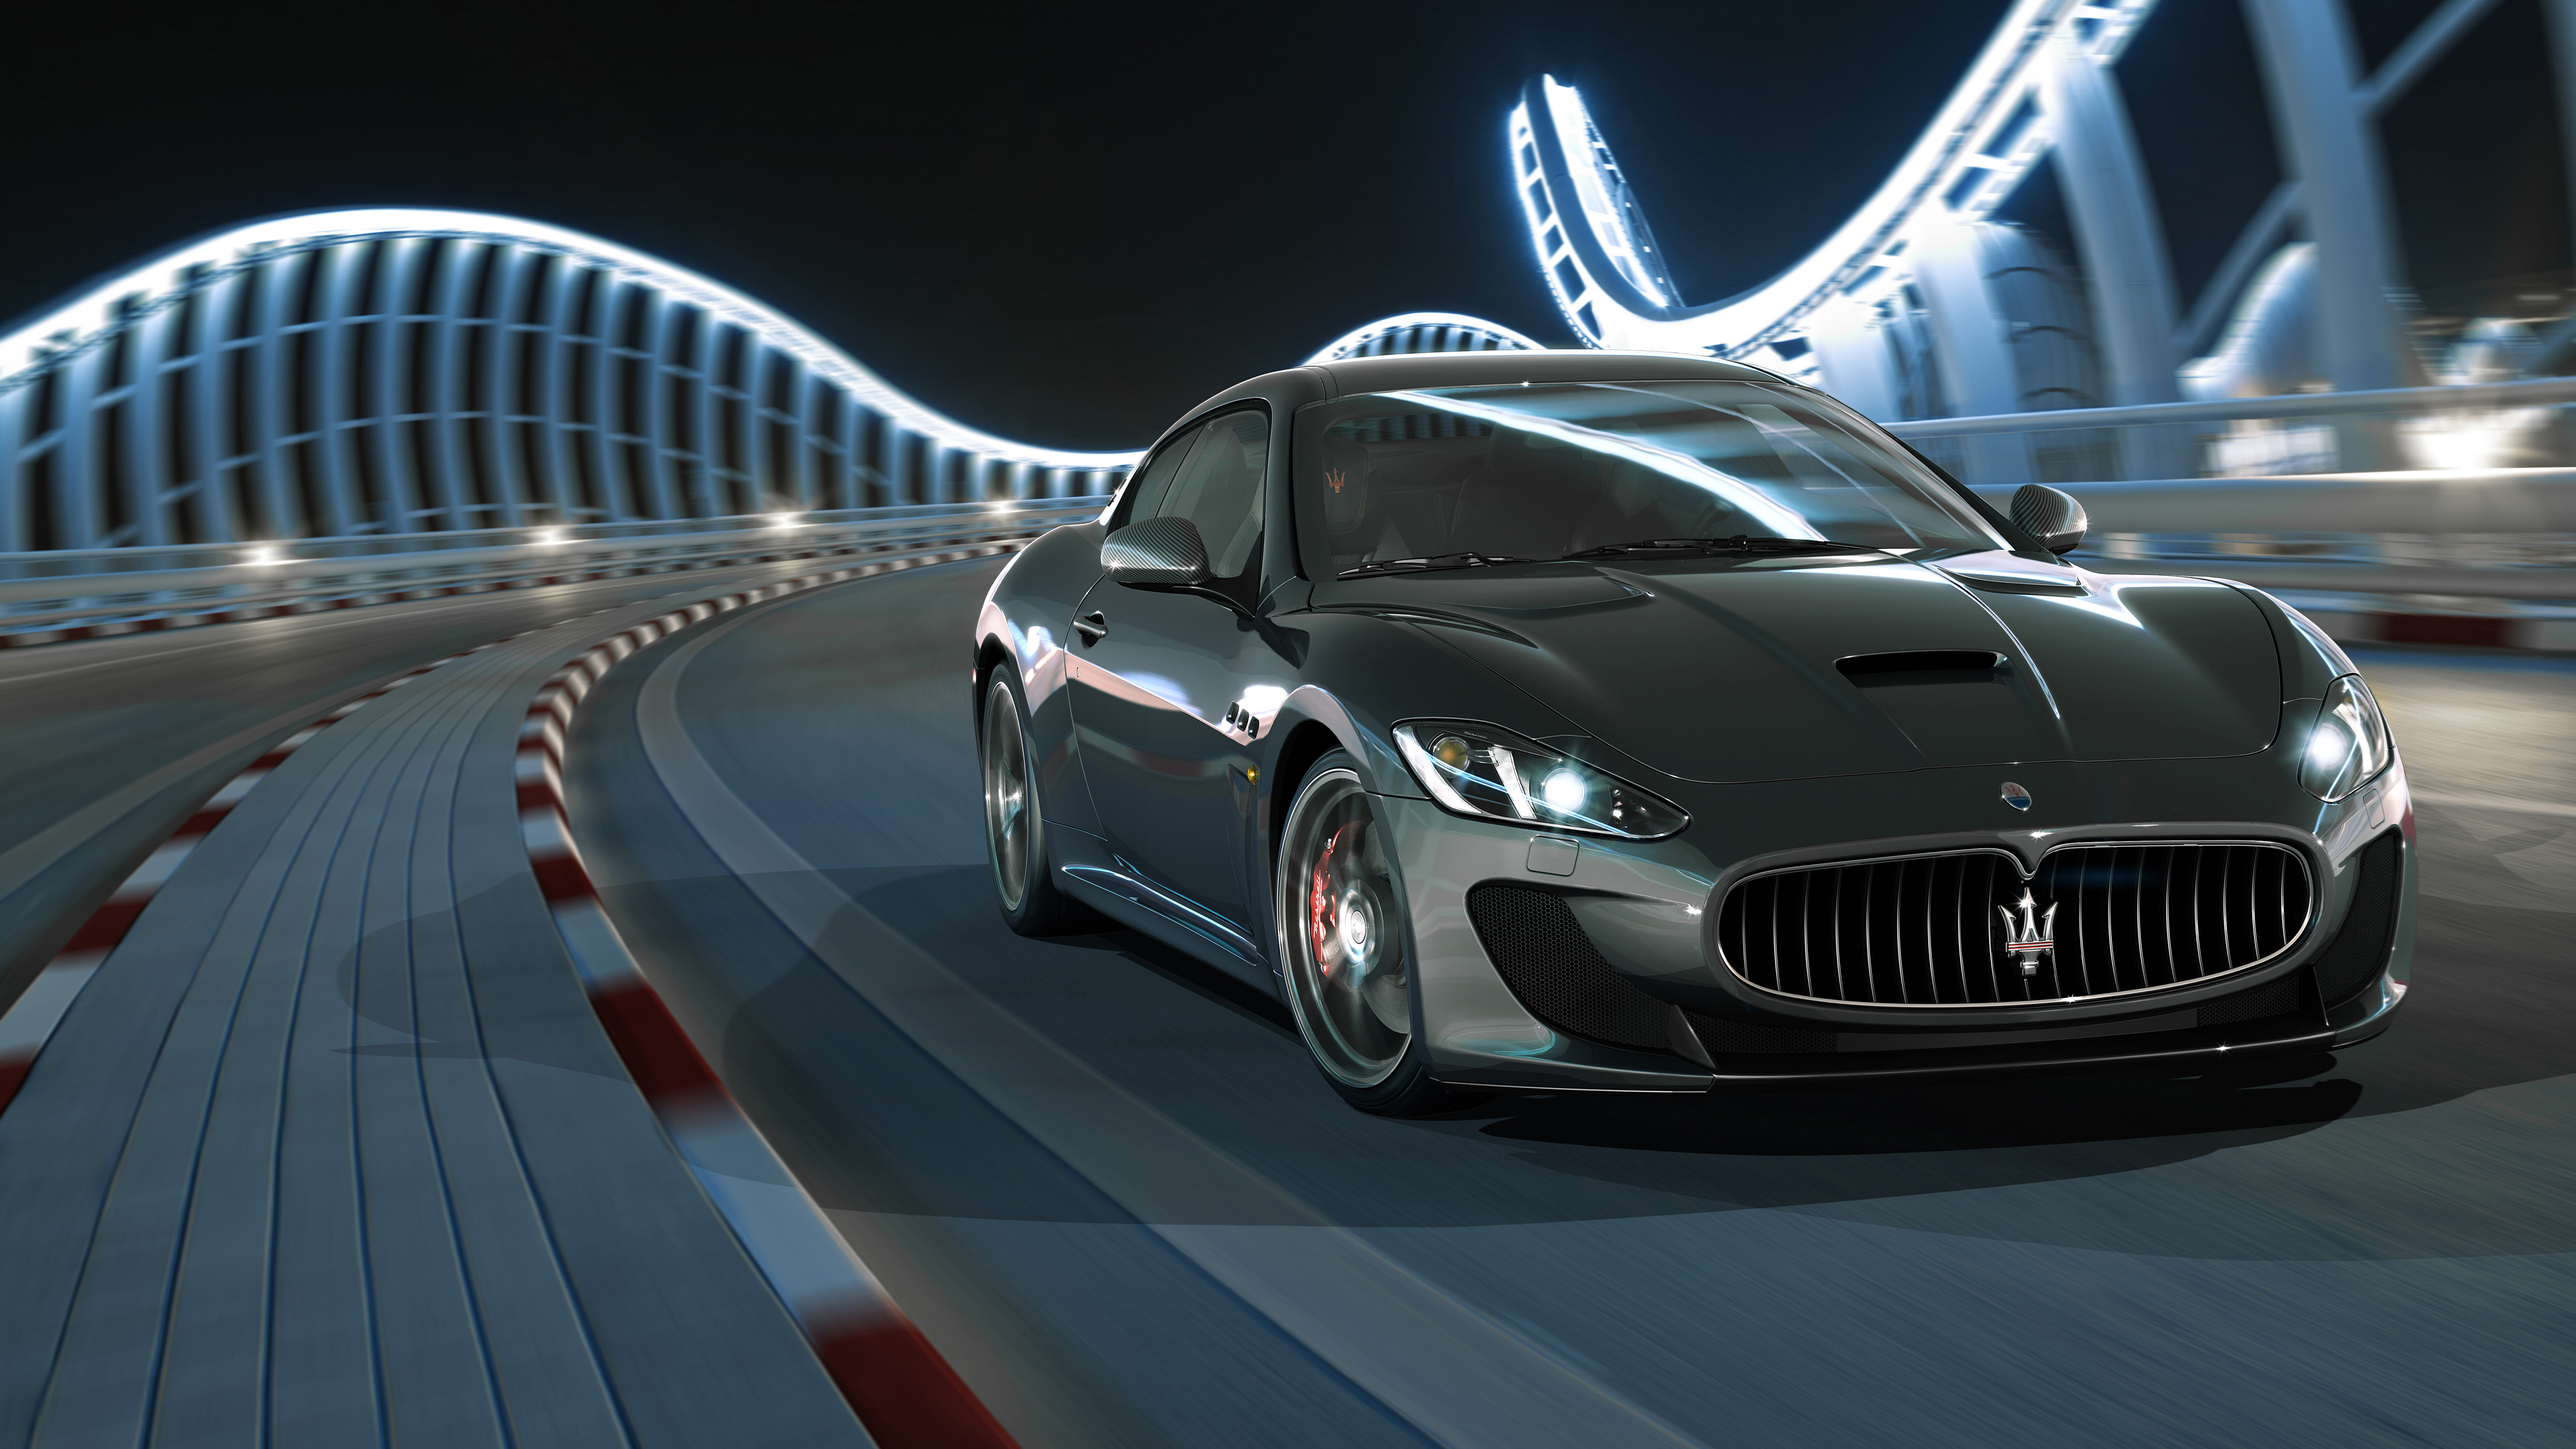 2018 Maserati Granturismo 4k Wallpaper Hd Car Wallpapers Id 7329